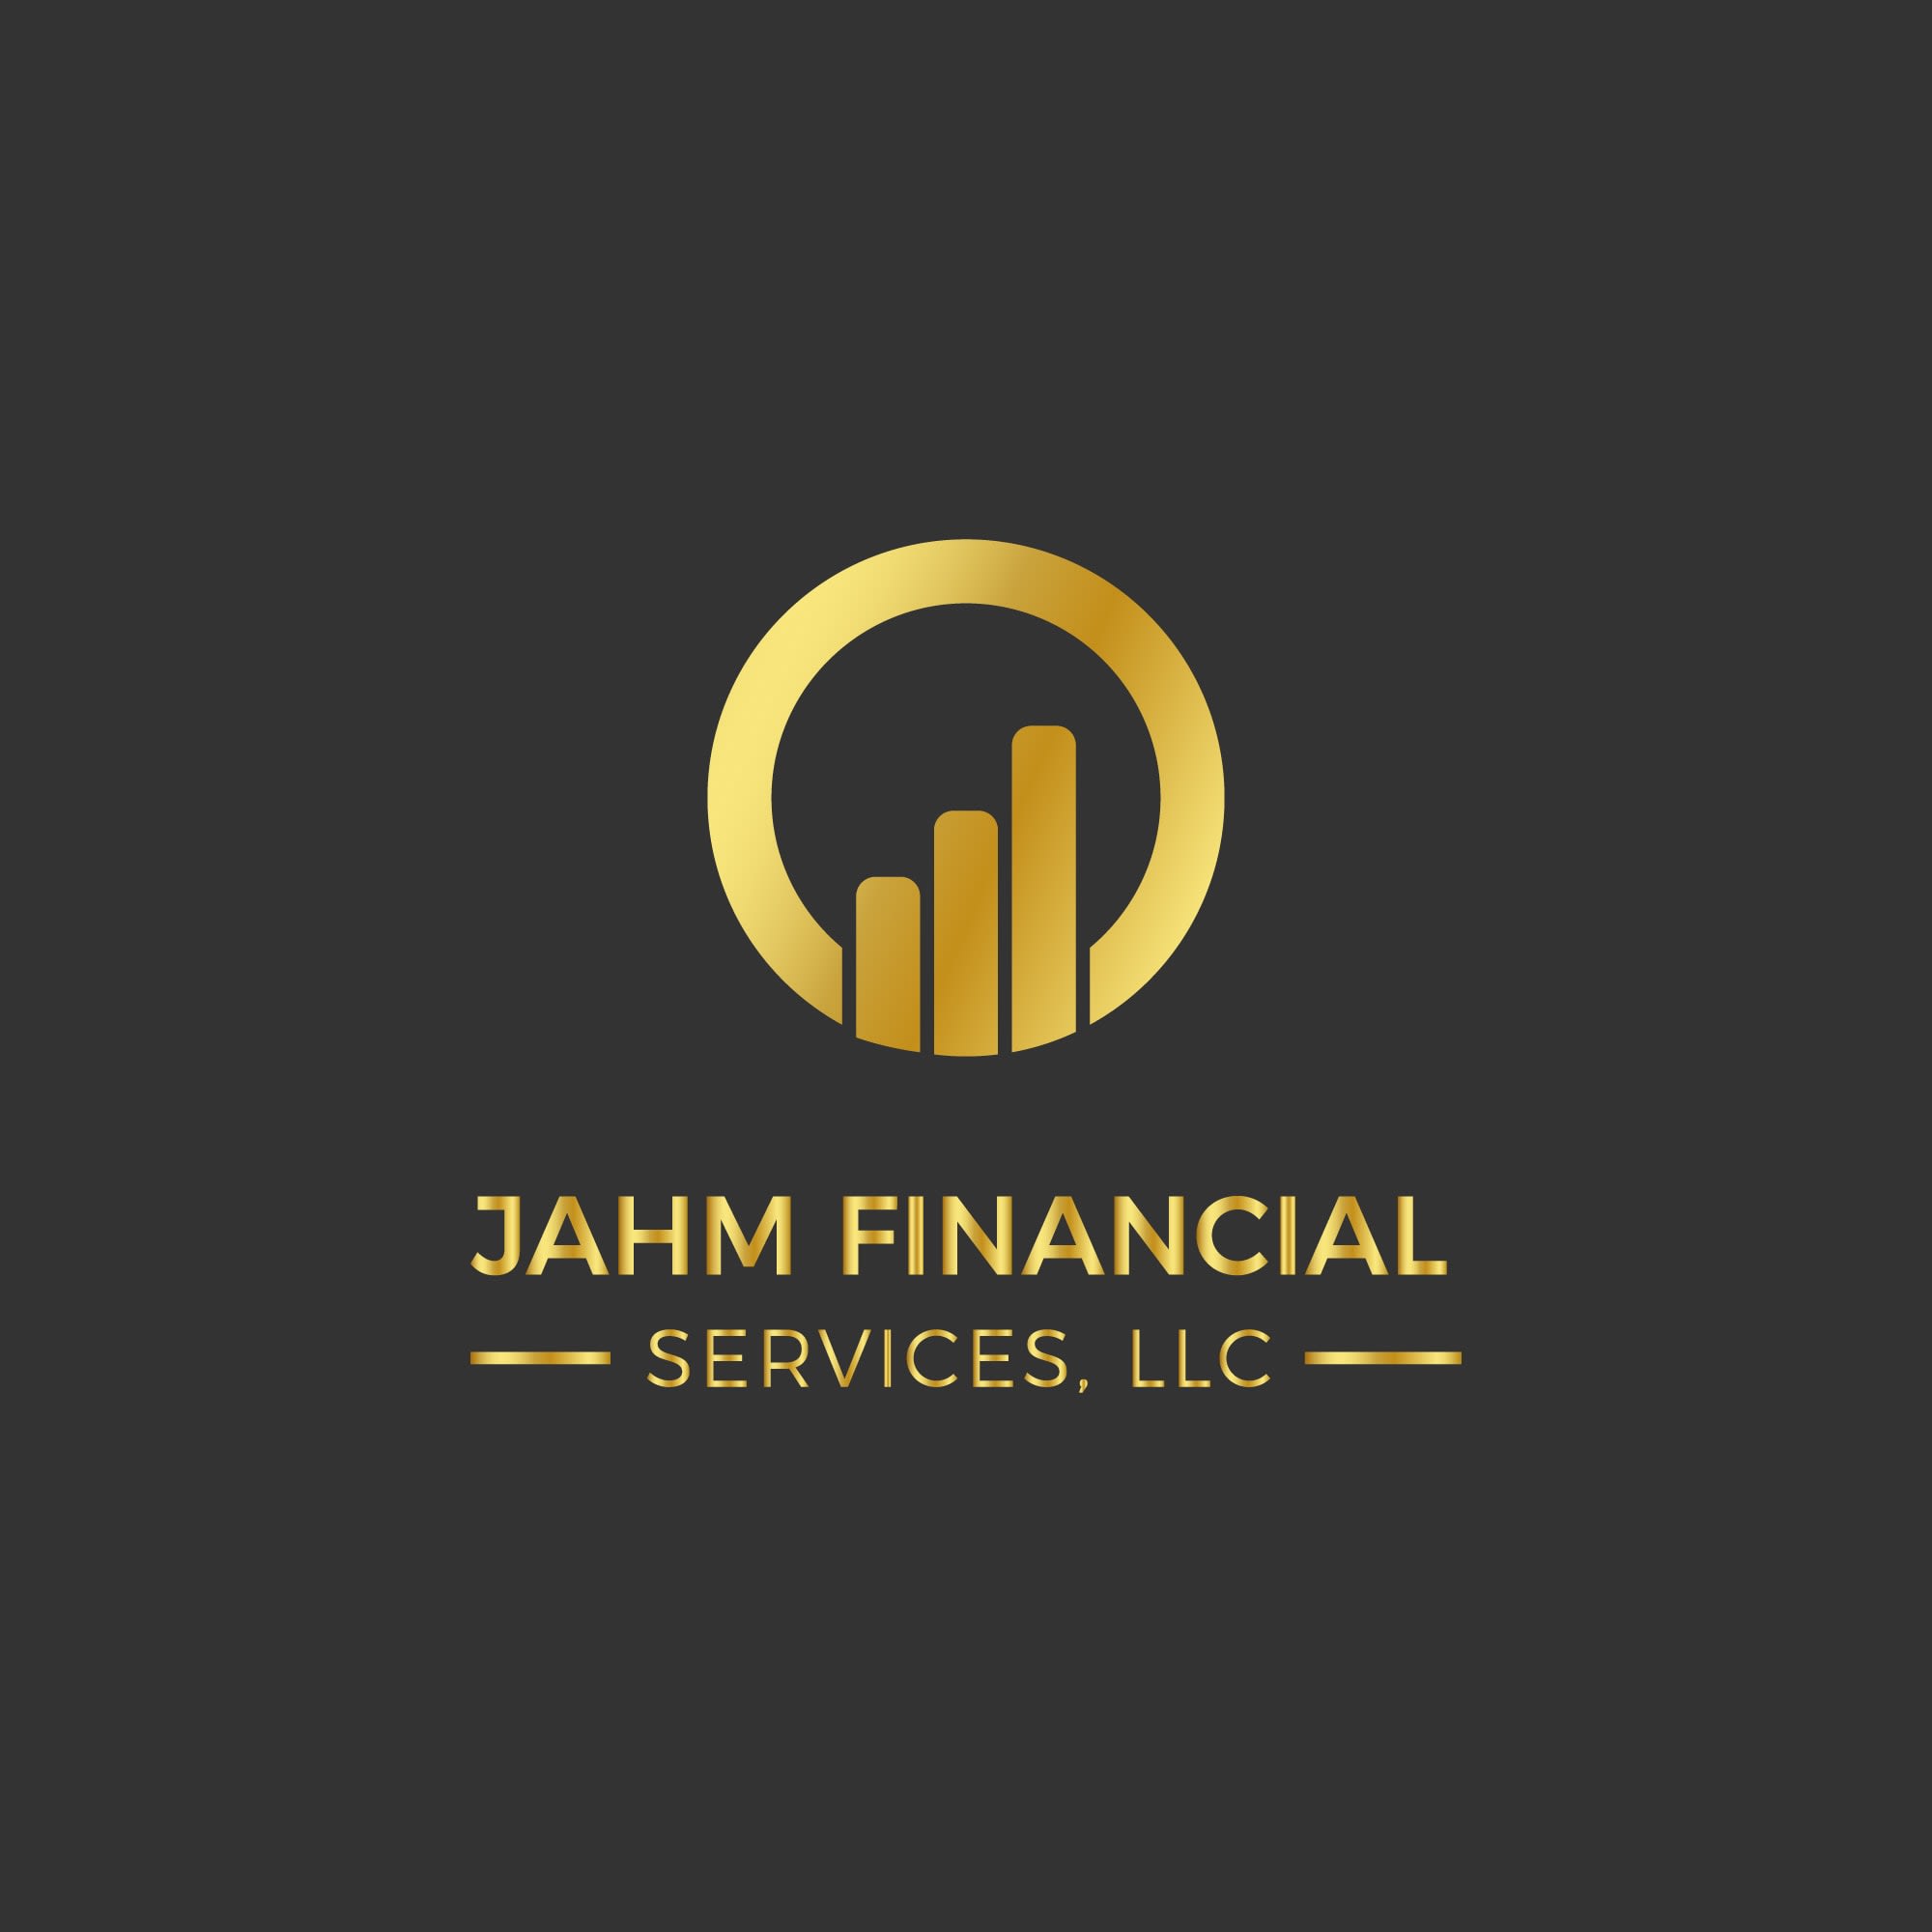 JAHM FINANCIAL SERVICES LLC